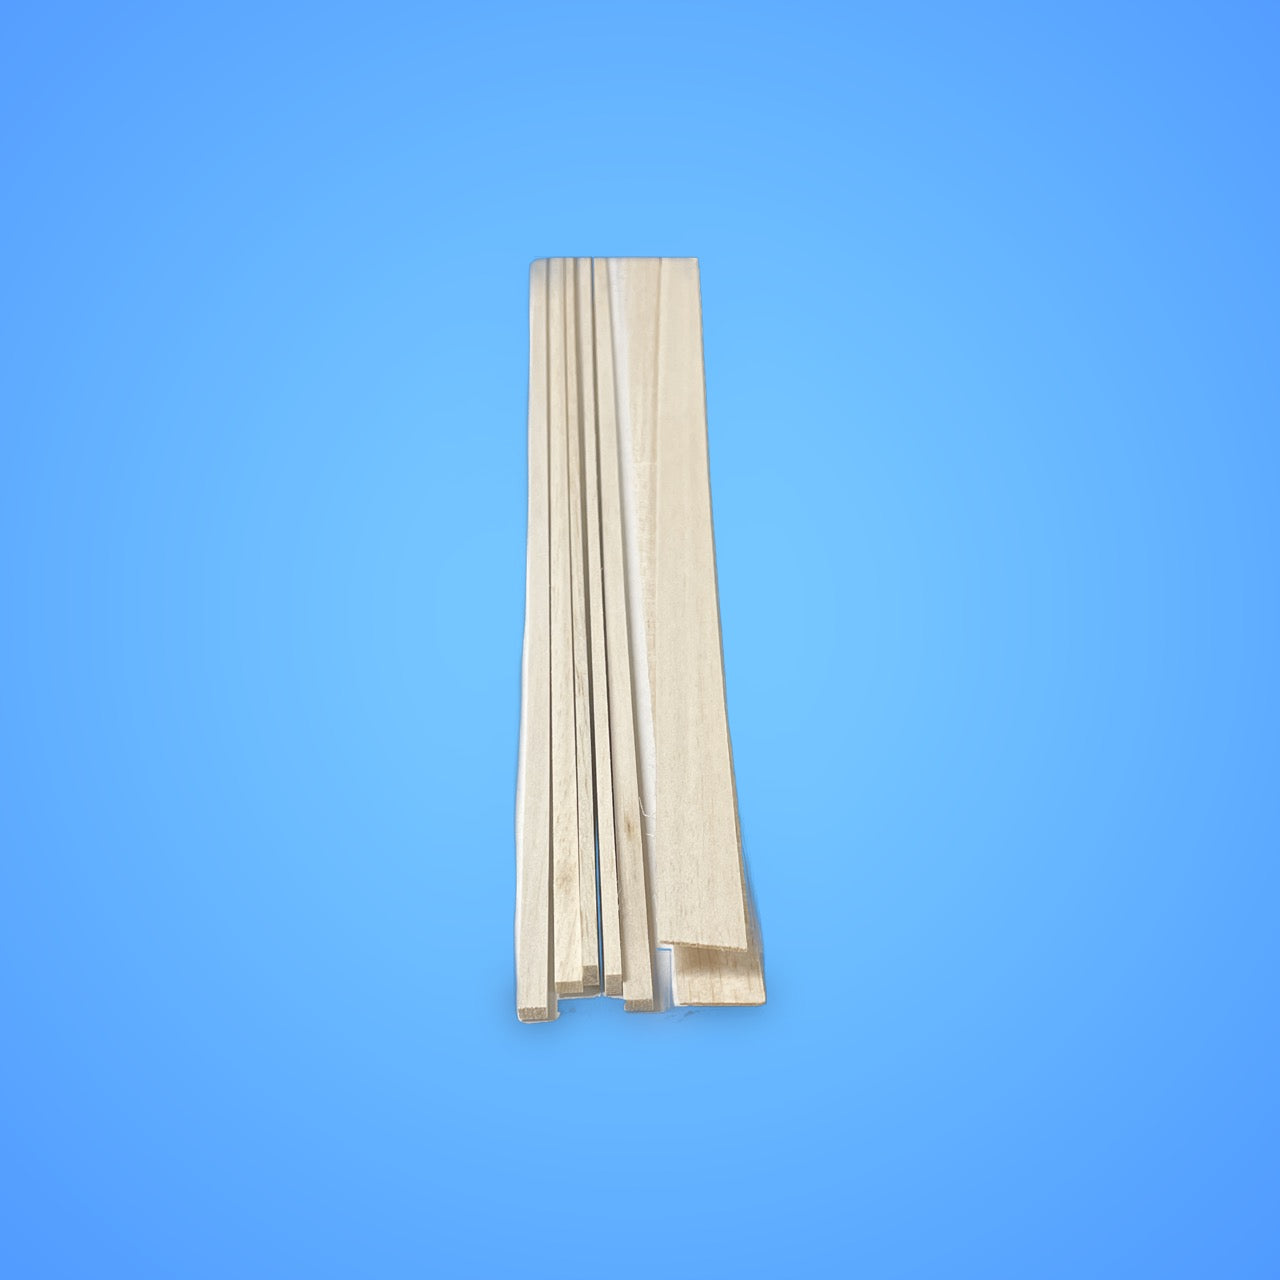 Balsa Wood Strips